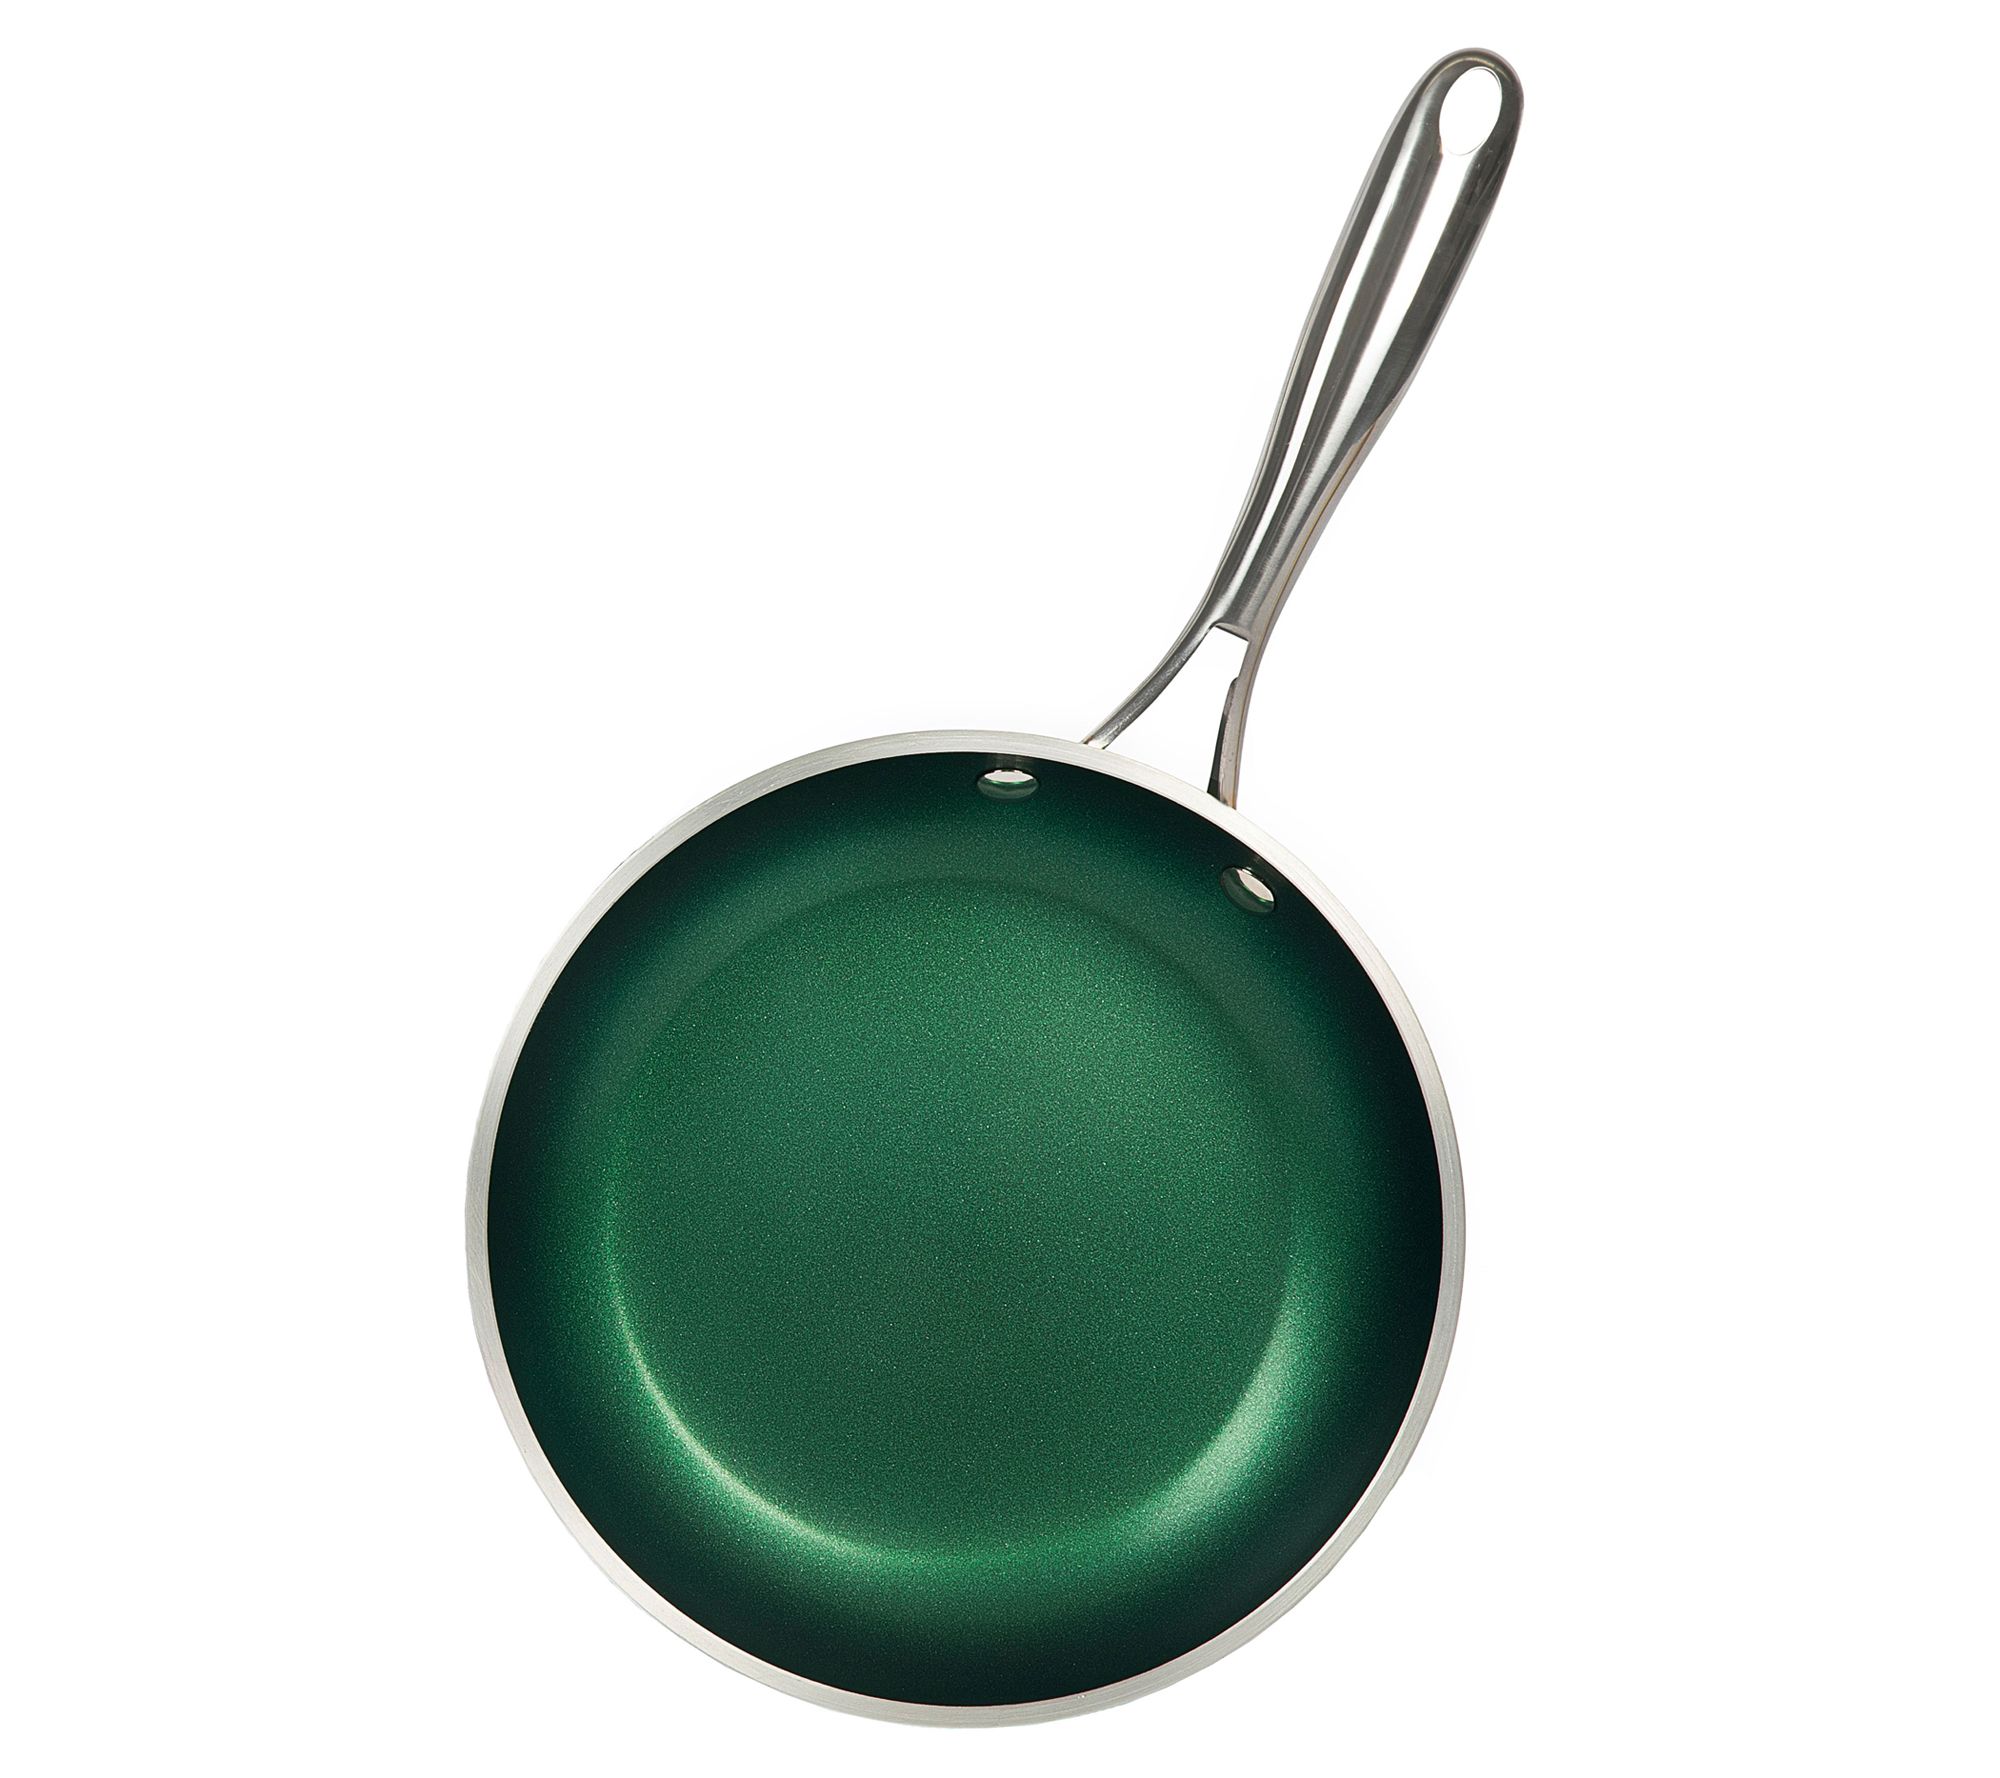 Bene Casa 12 Nonstick Frying Pan ,Green